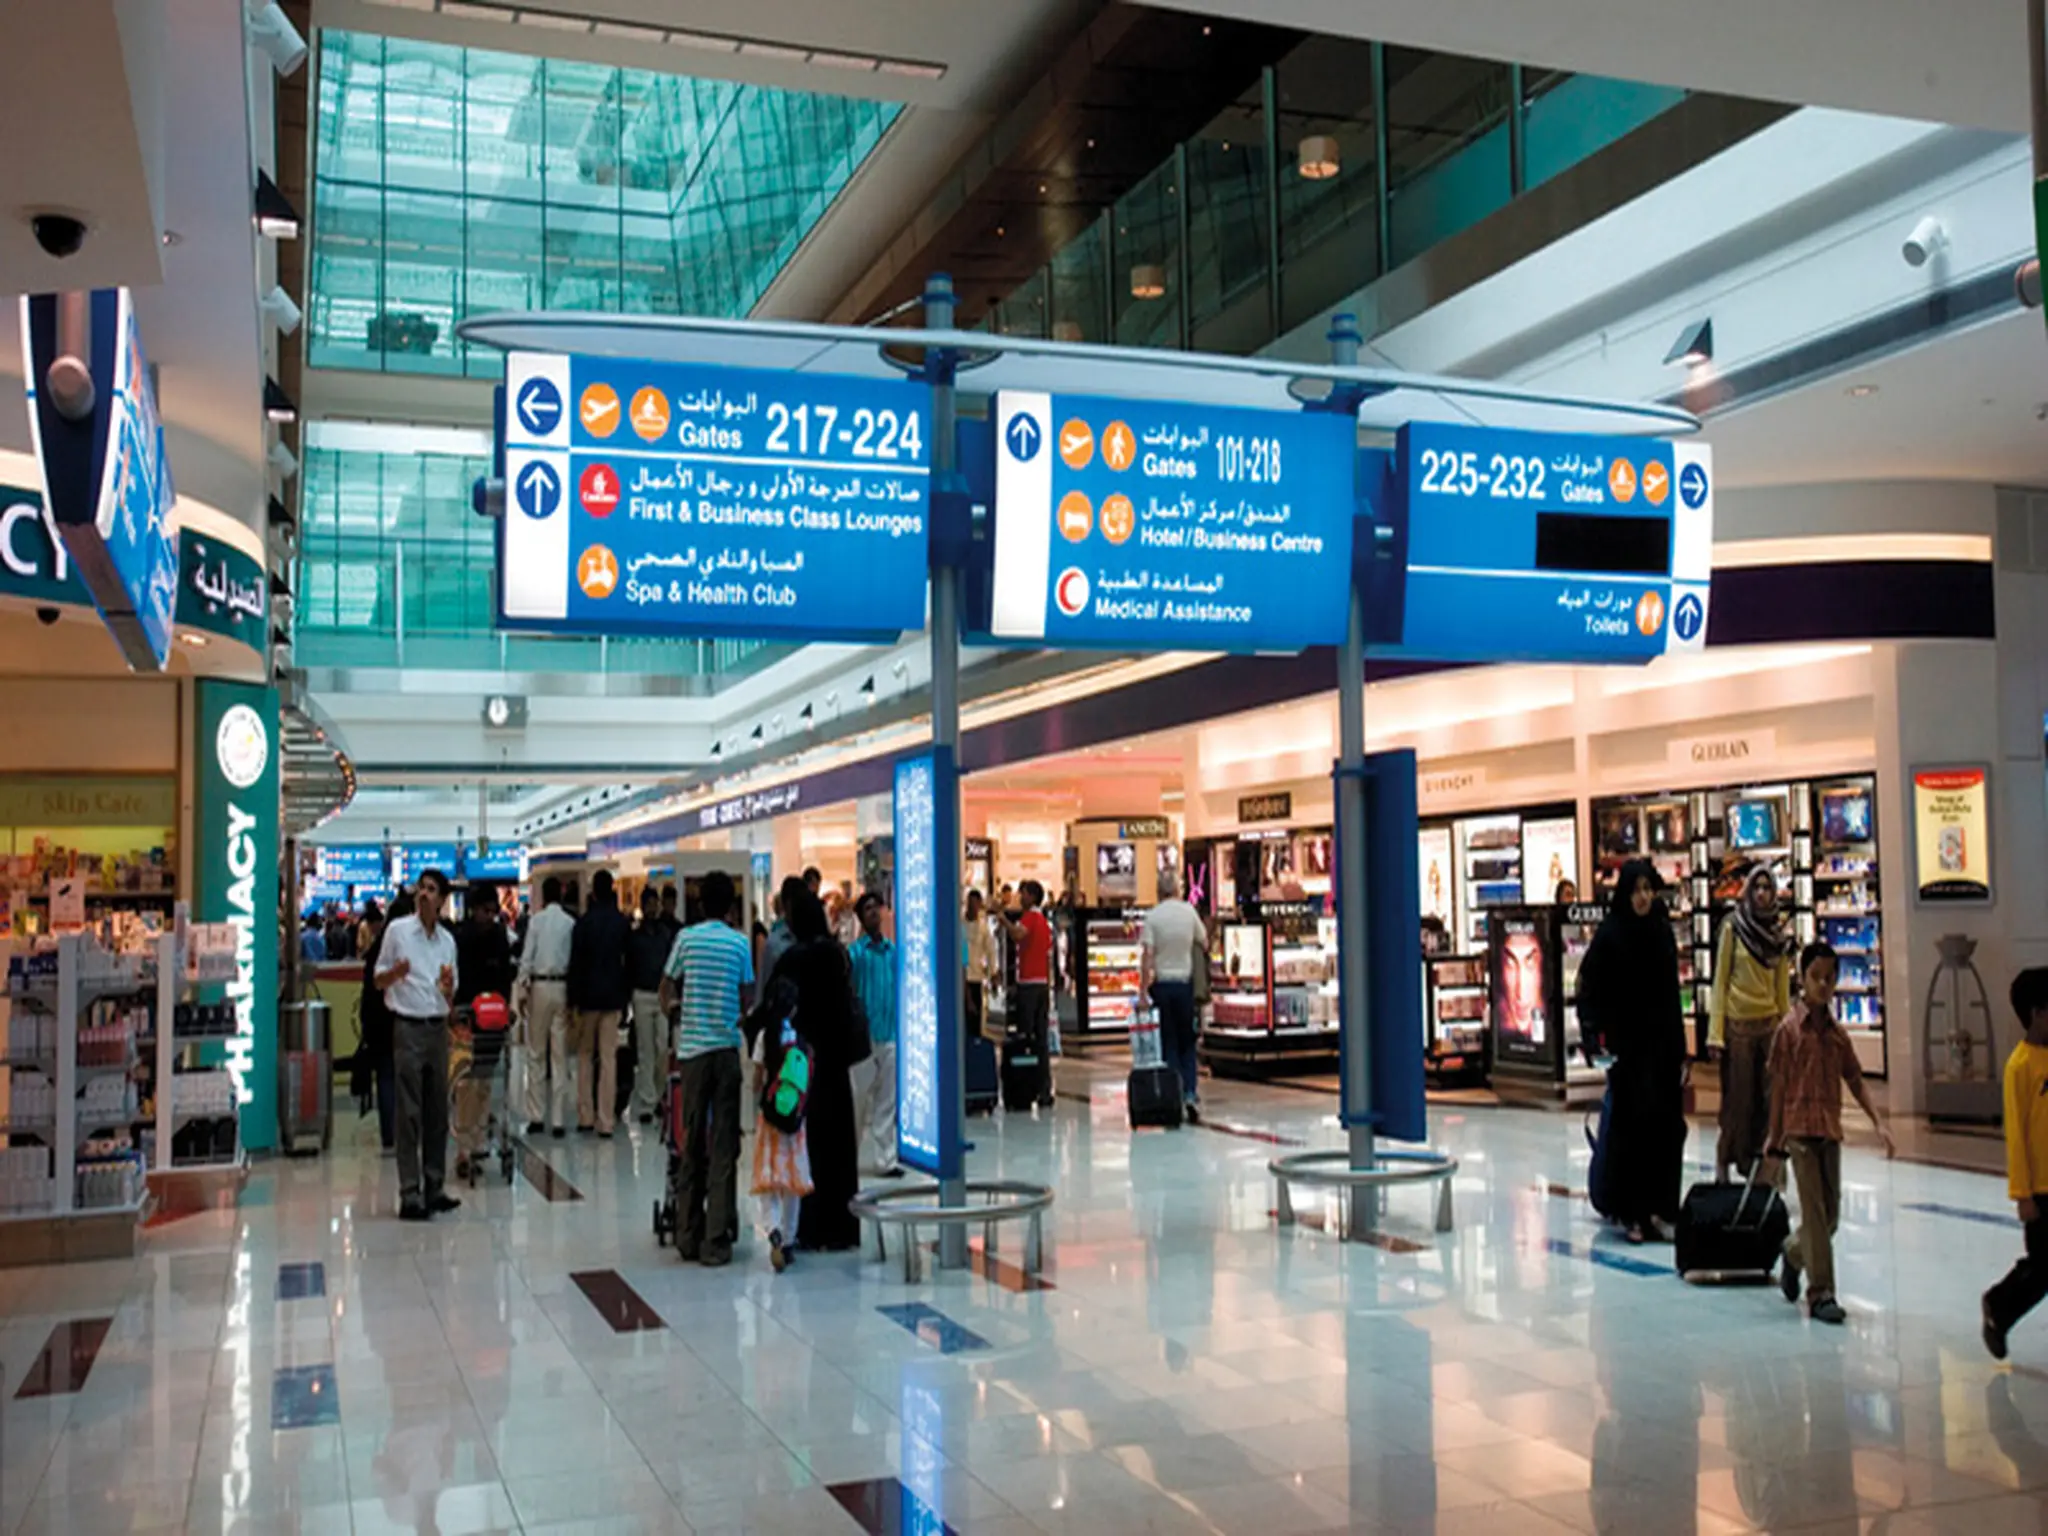 Urgent Emirates: Statement from Dubai International Airport